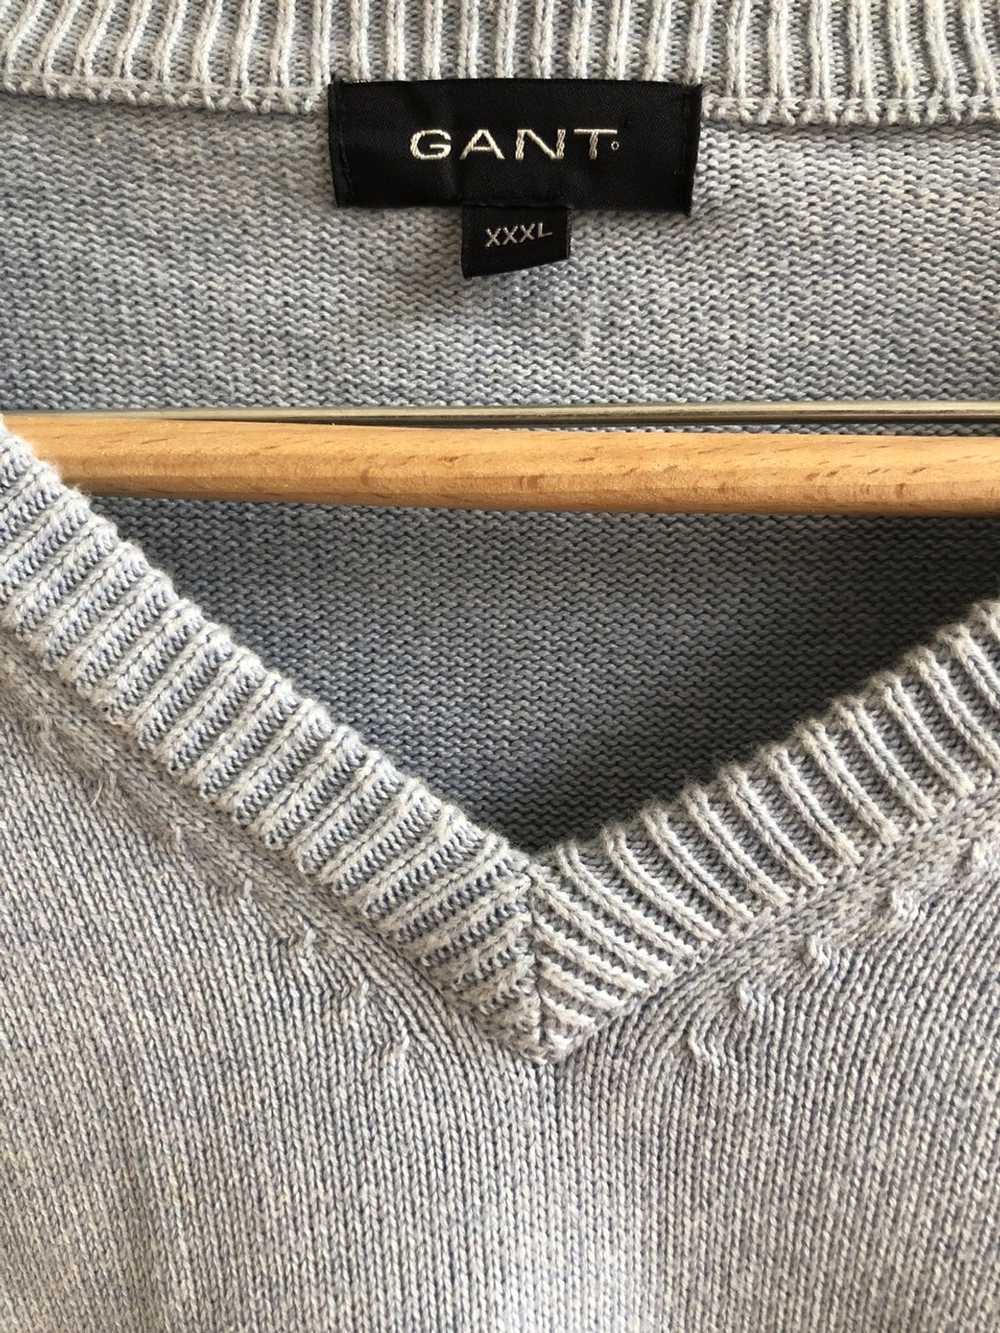 Gant XL 100% cotton knit V-neck - image 2